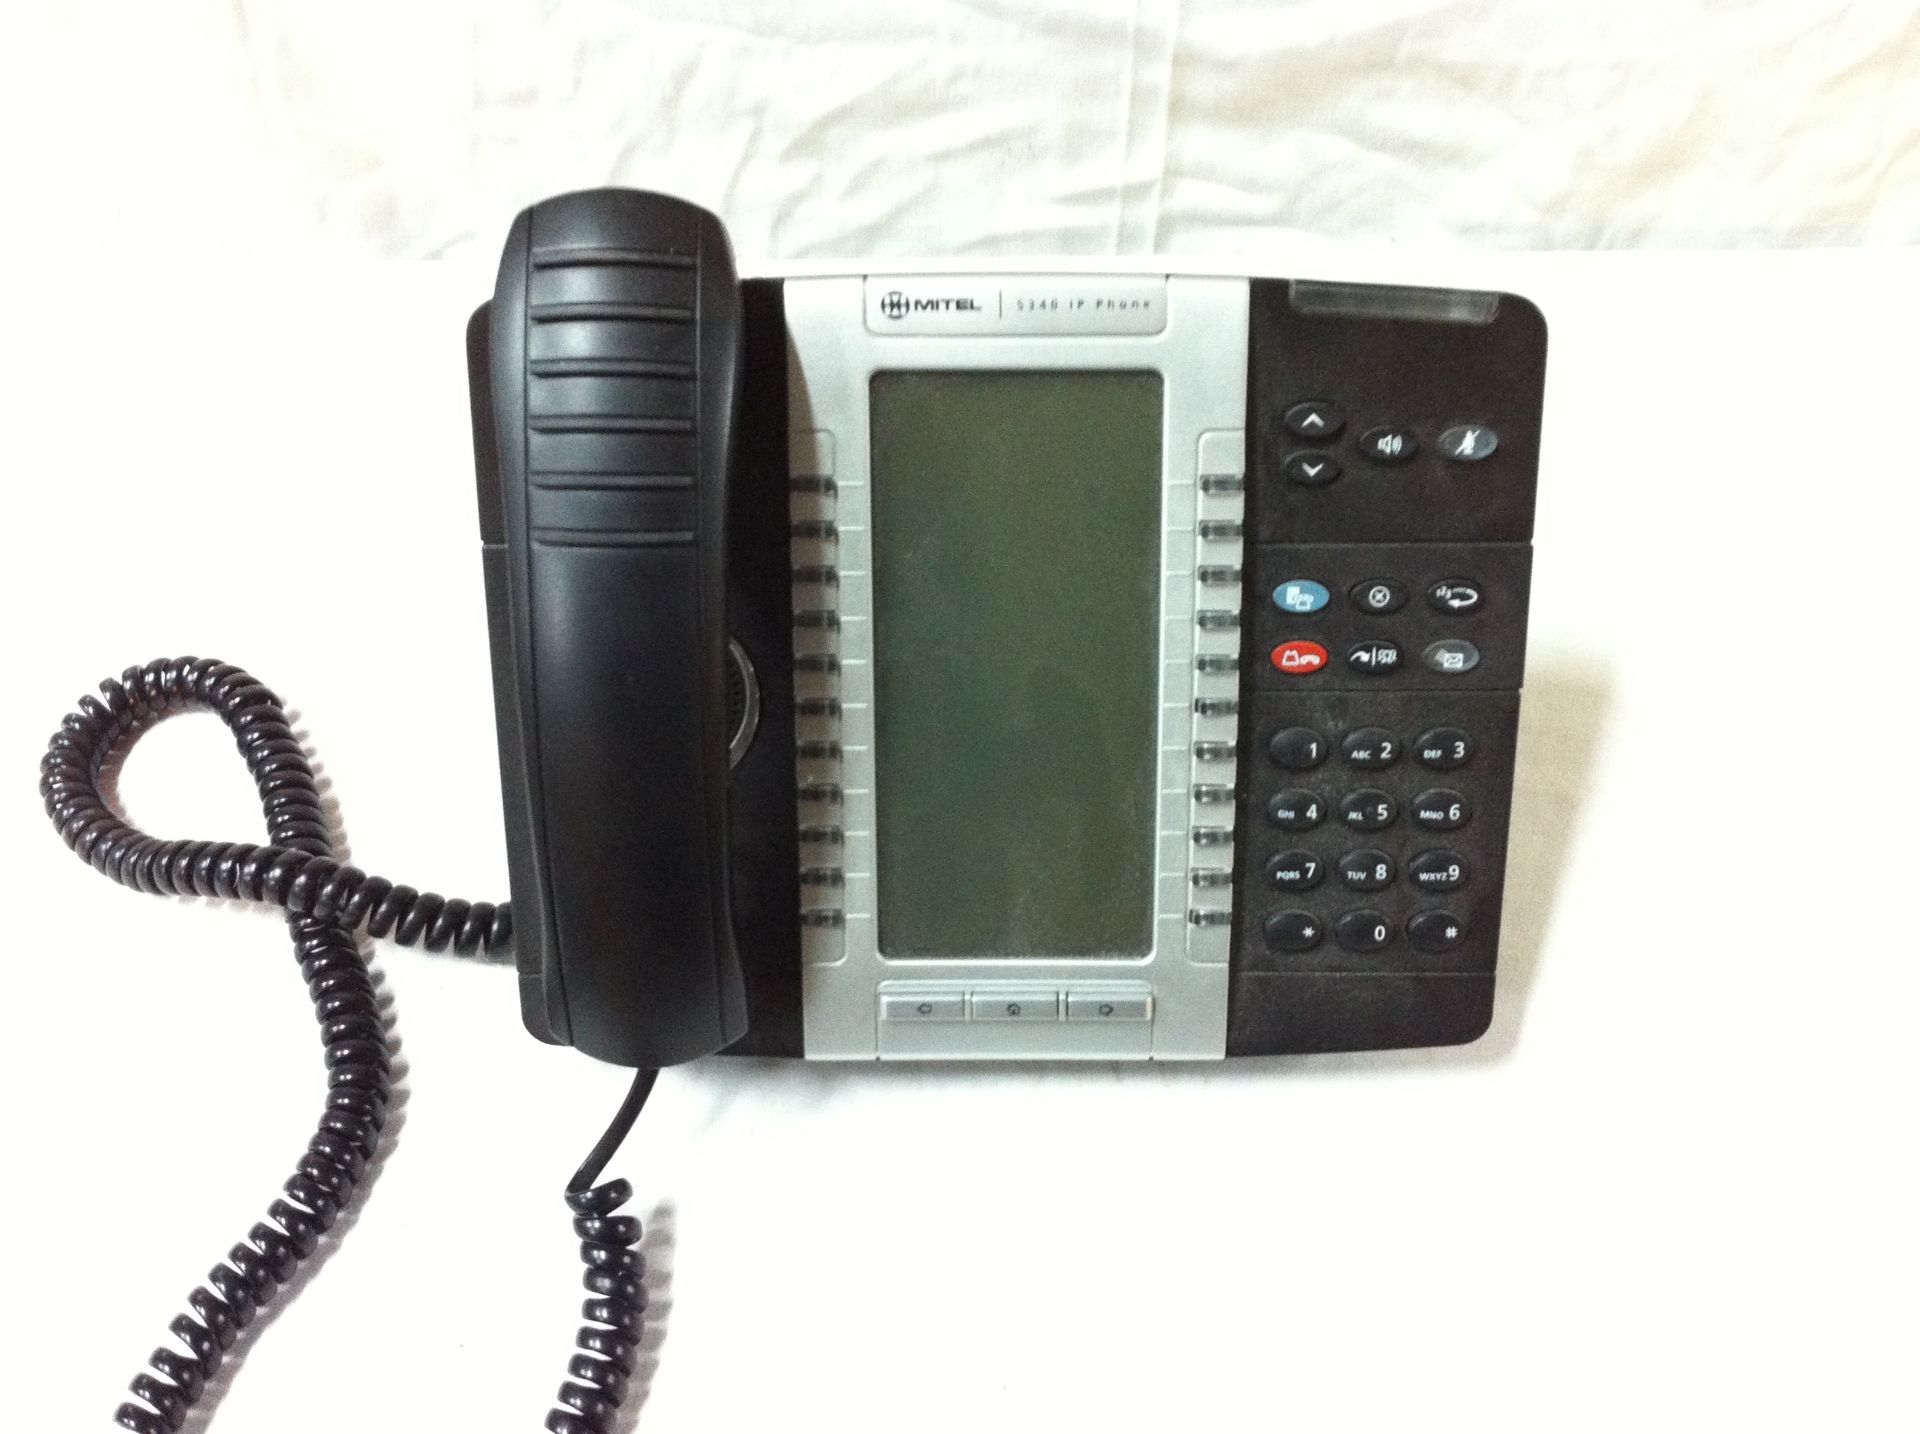 11x Mitel 5312 IP Office Phones and 8x Mitel 5340 IP Office Phones